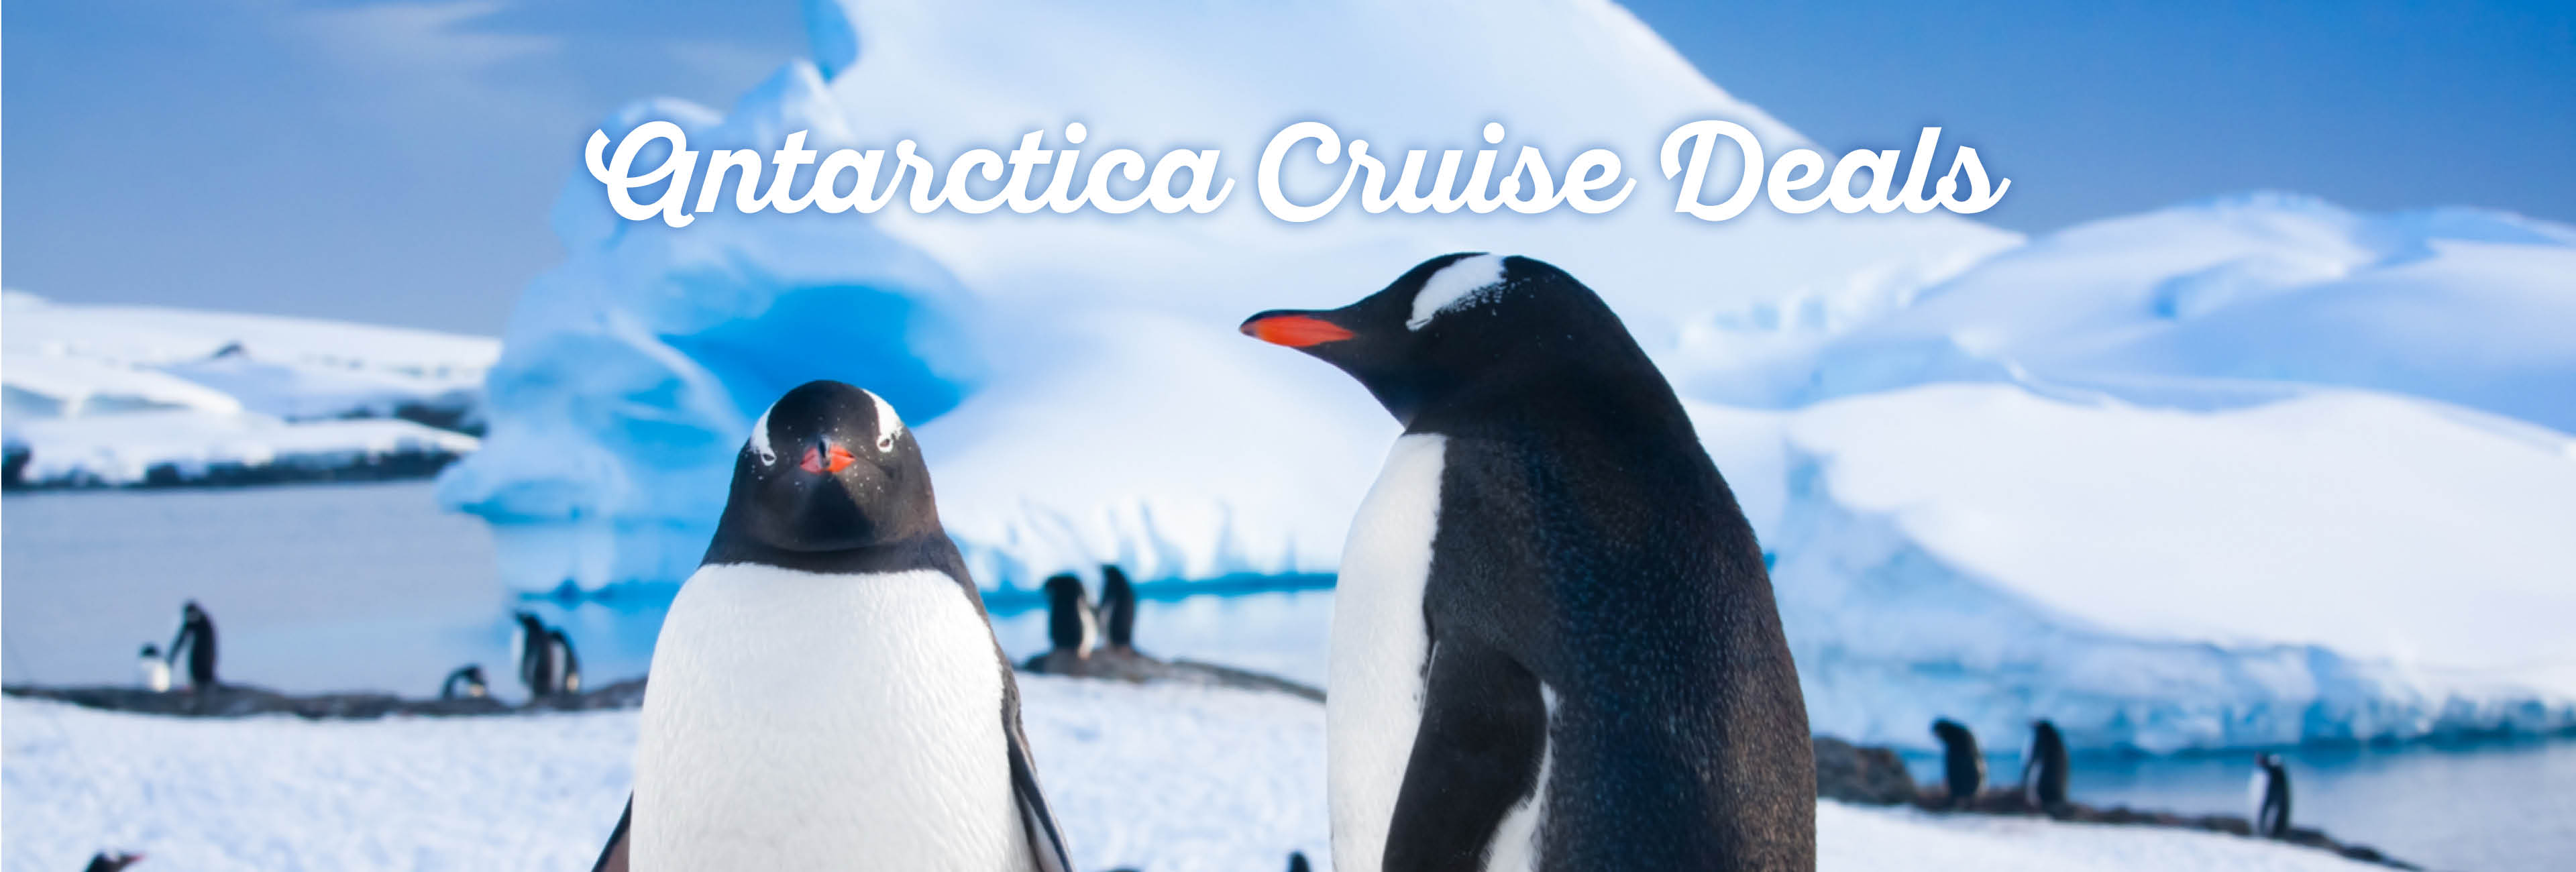 antarctica-cruise-deals1.jpg